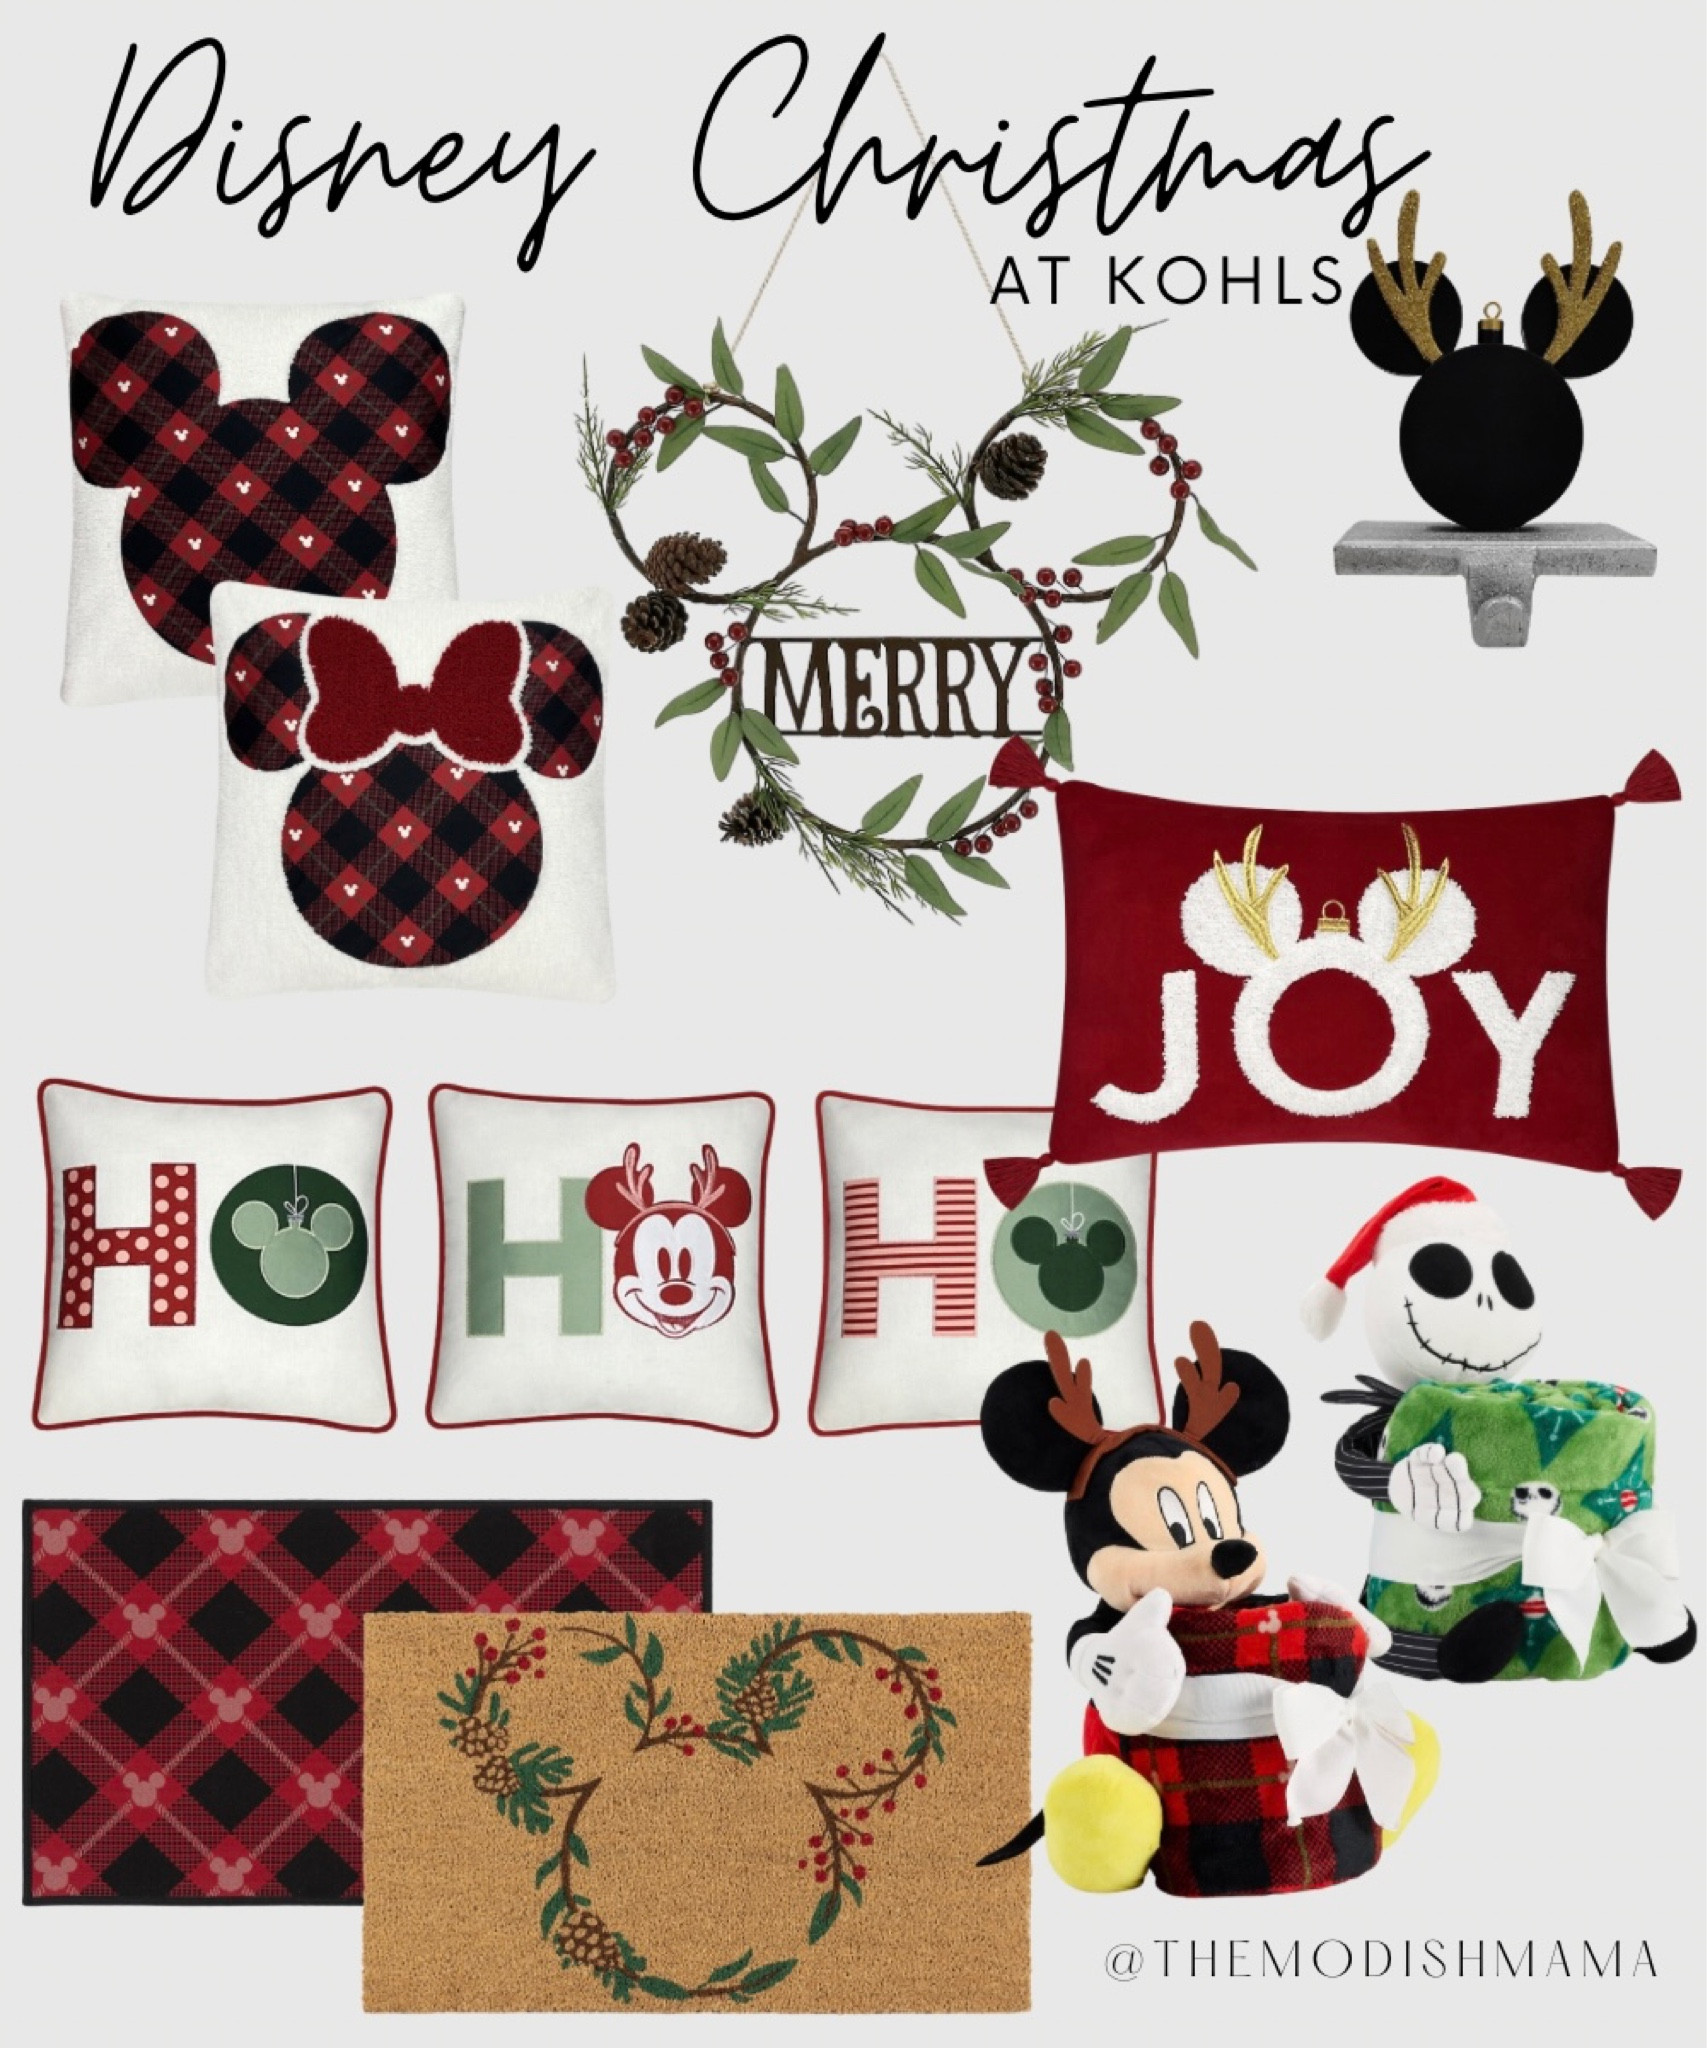 St. Nicholas Square® Home for Christmas Truck Disney Throw Pillow